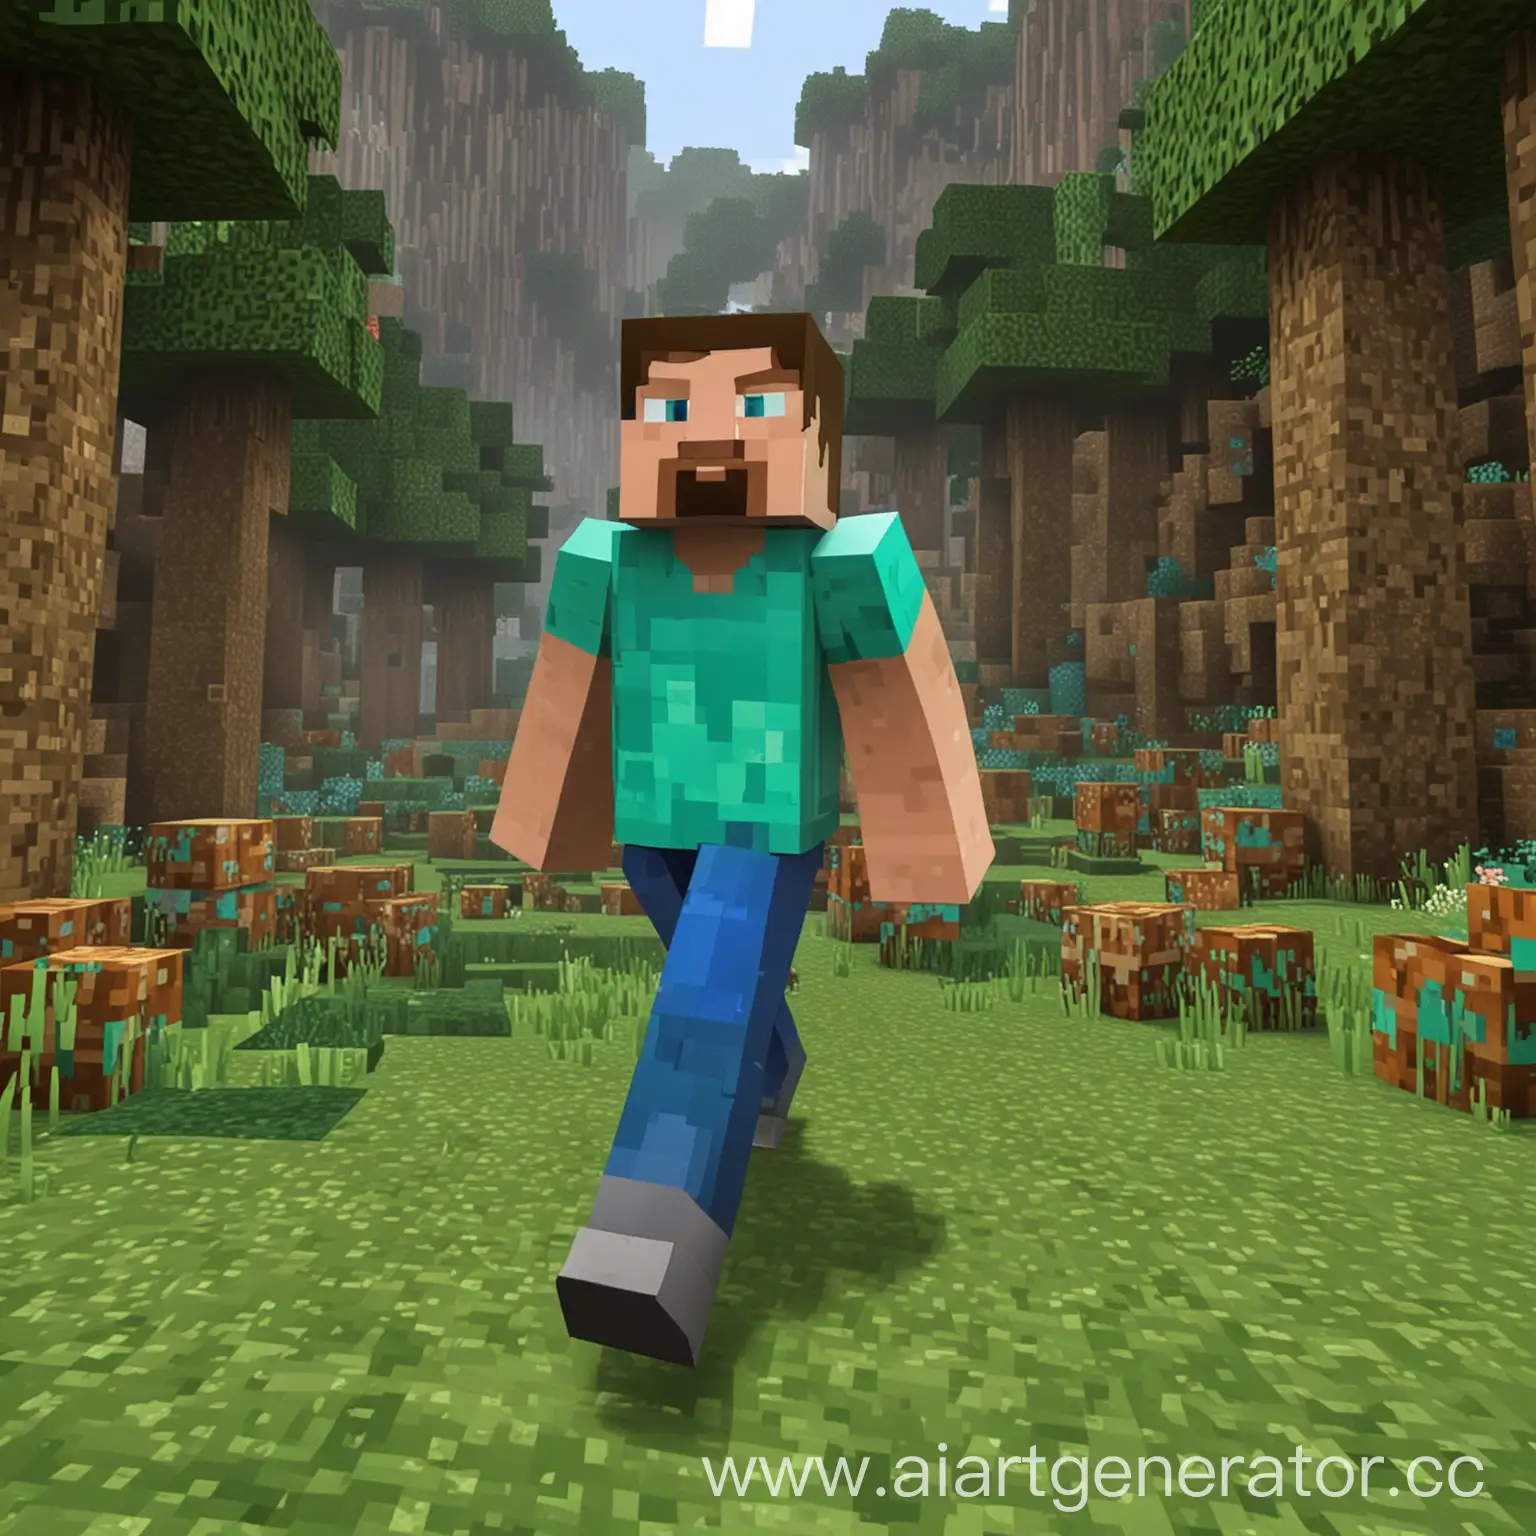 Blocky-Adventures-Exploring-the-Pixelated-World-of-Minecraft